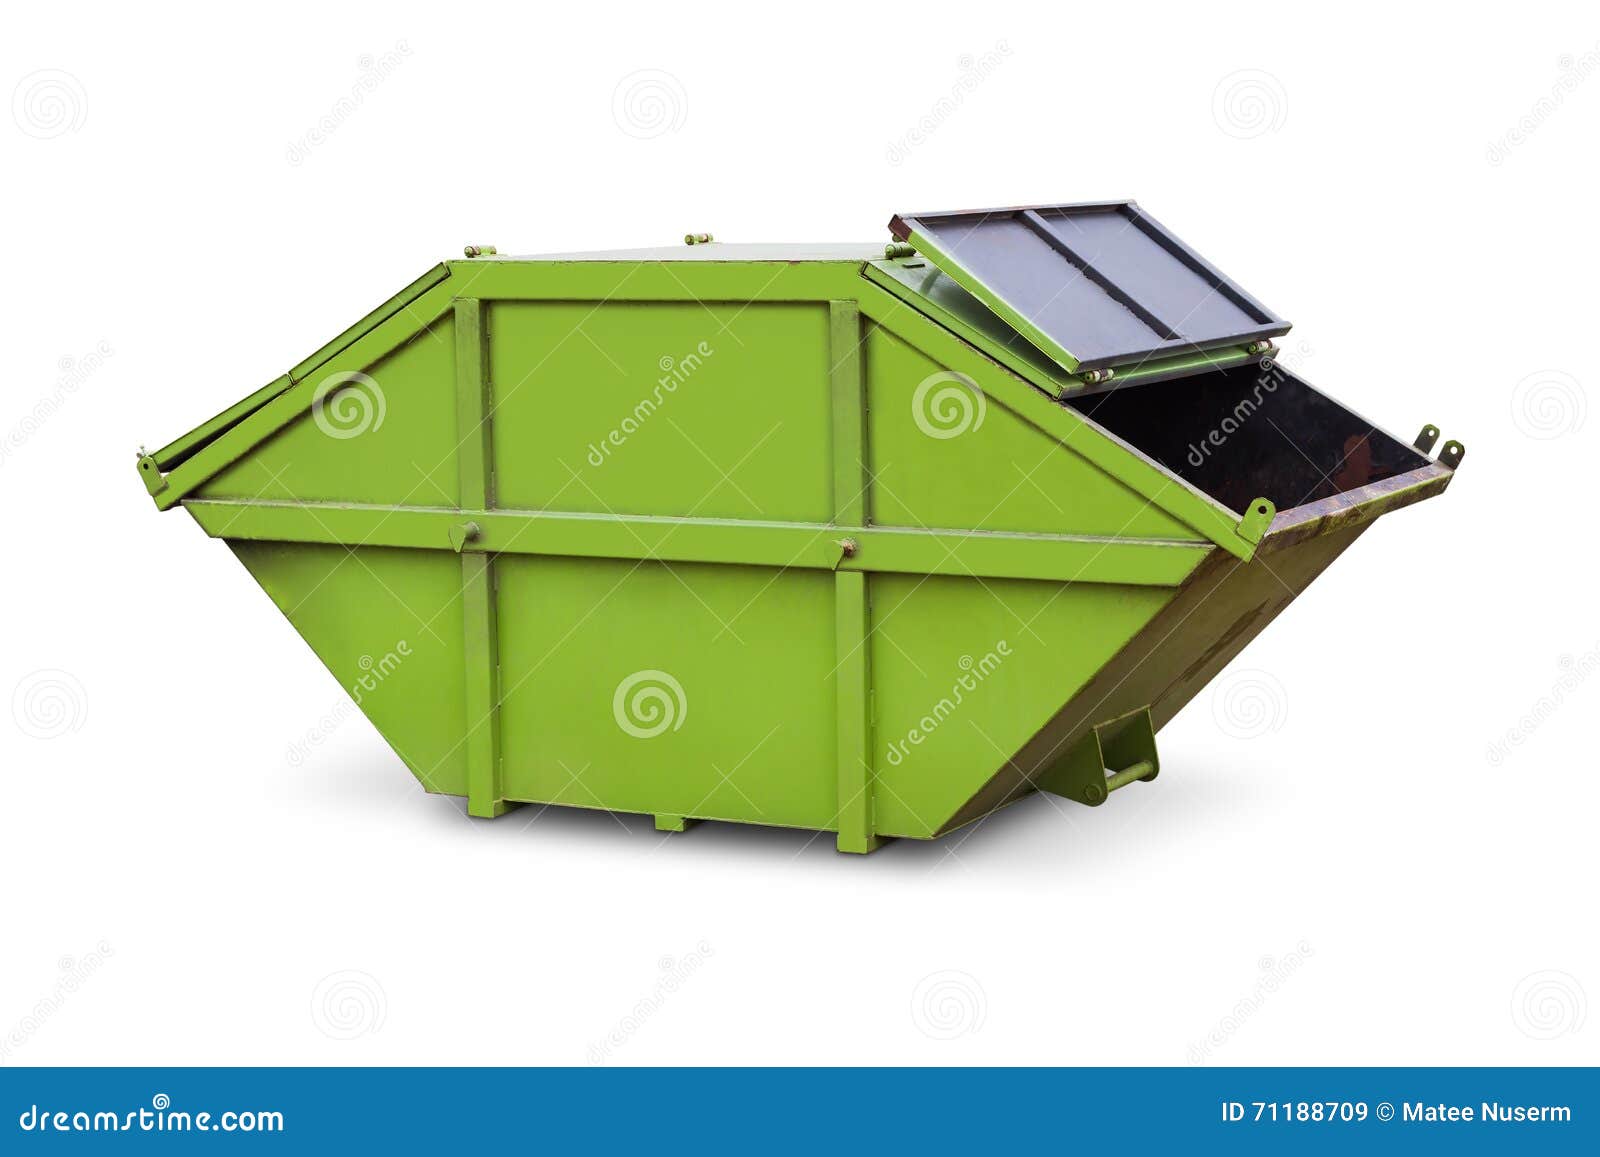 green skip or dumpster